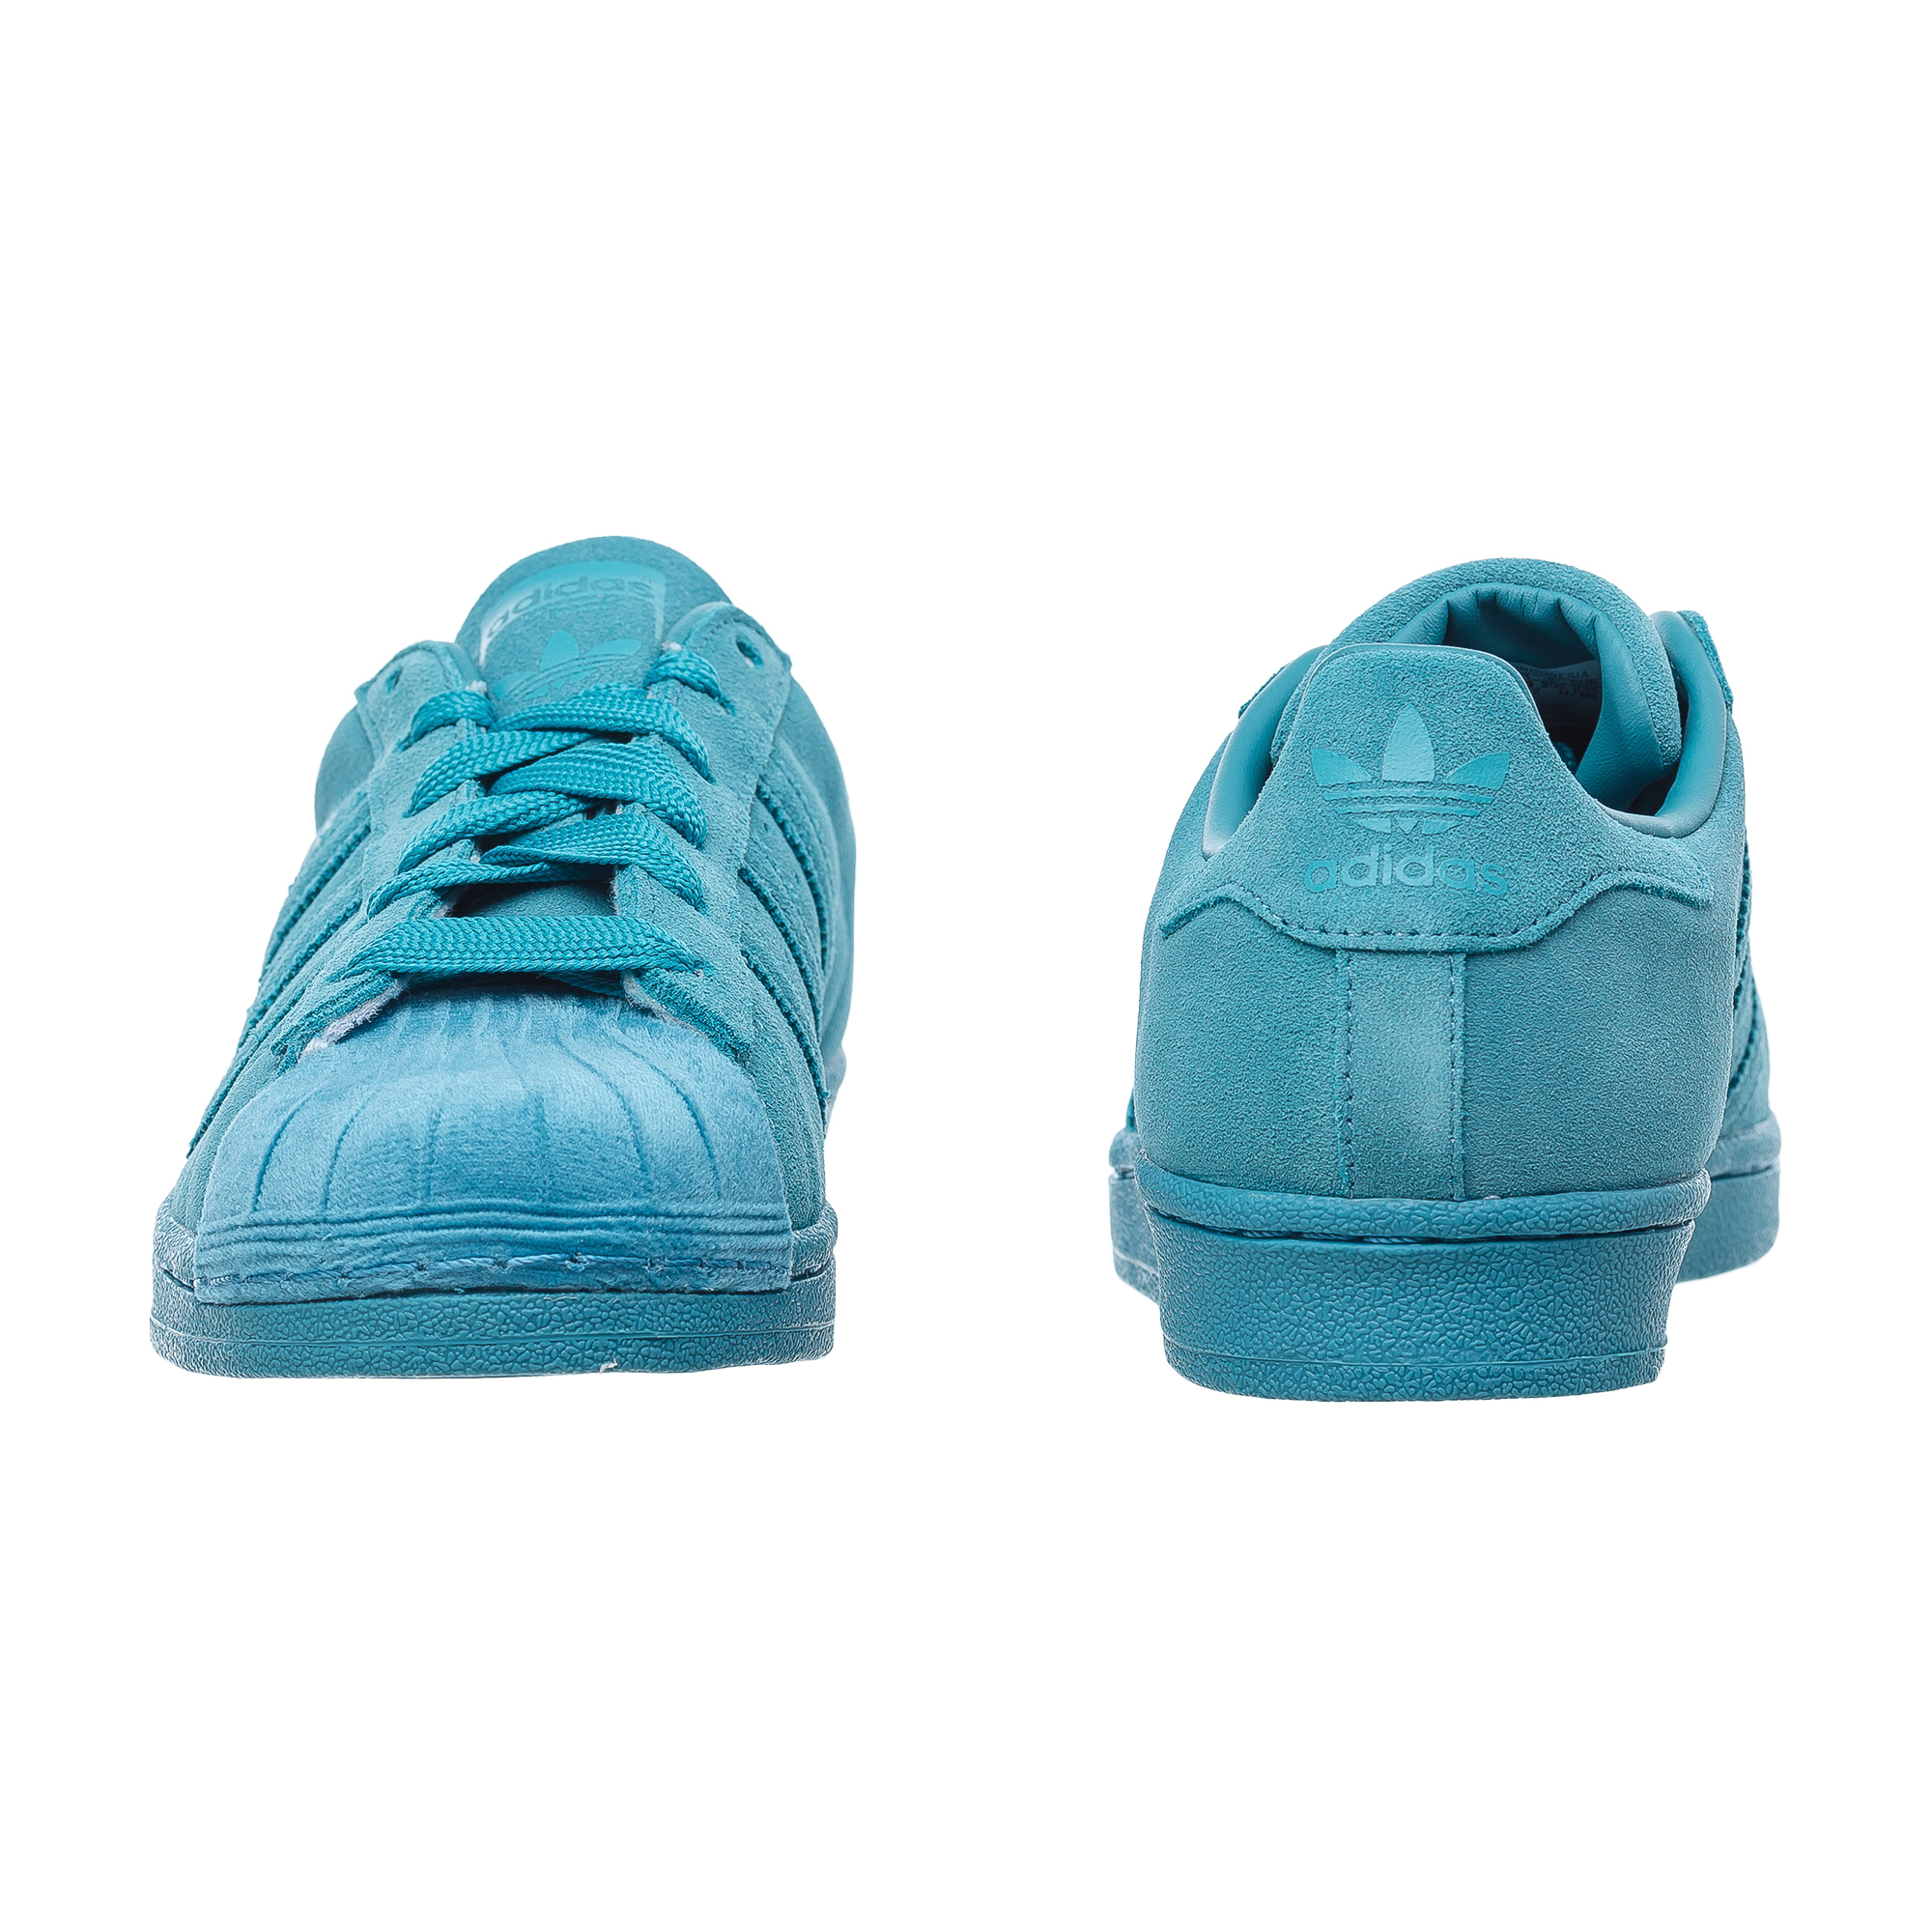 SUPERSTAR W Adidas, размер 36, цвет голубой ADCG6006 - фото 5